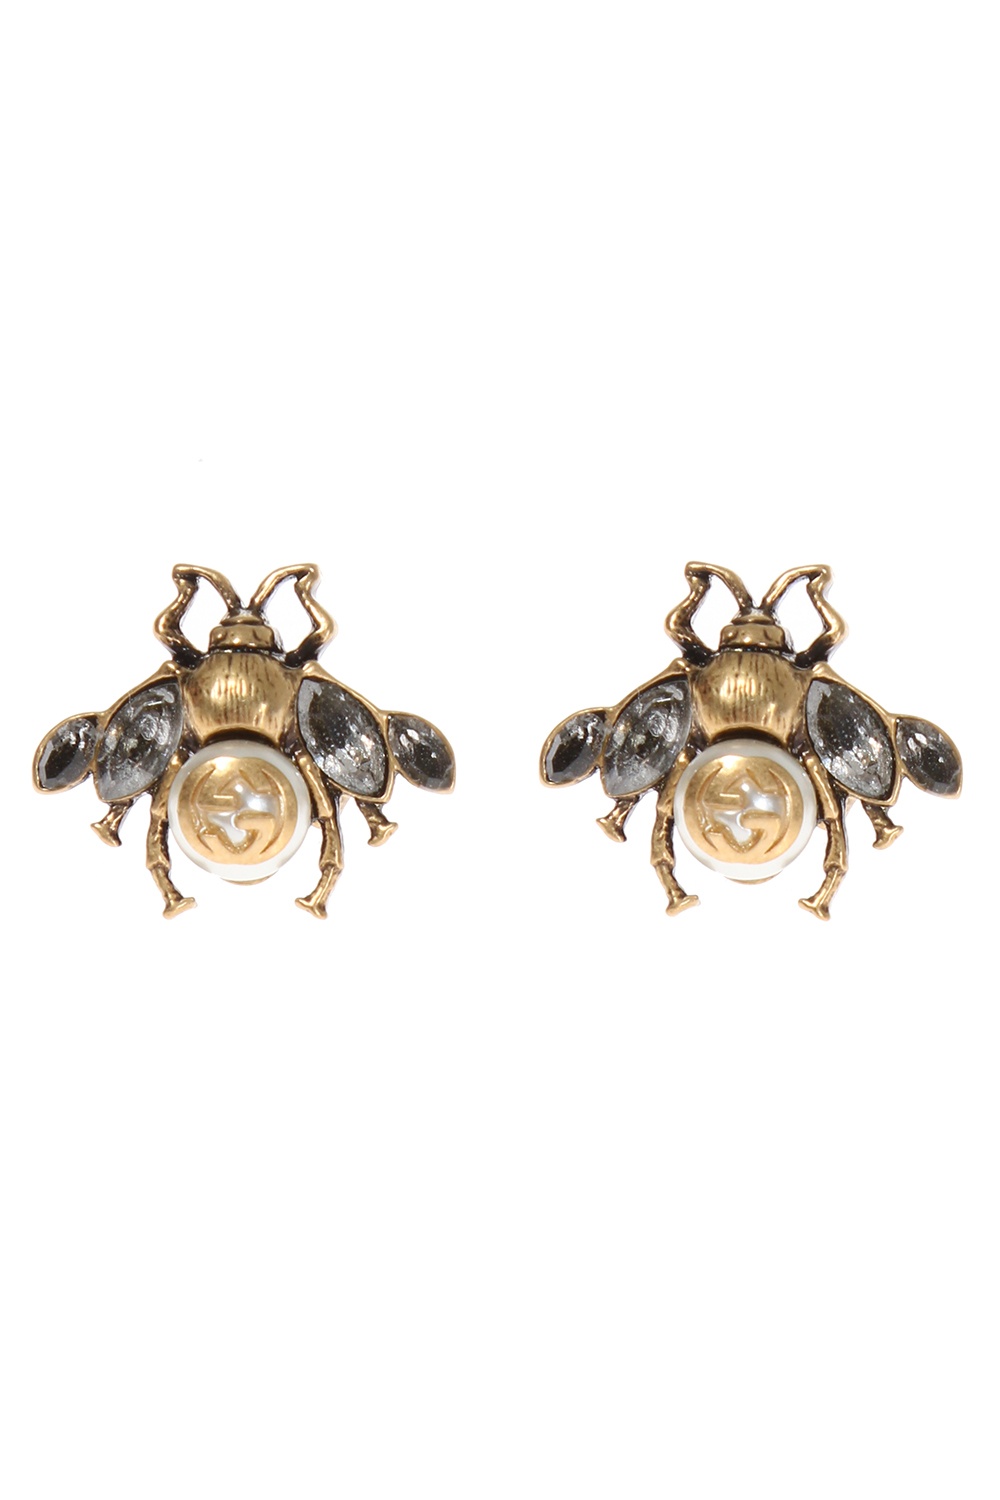 Gucci Bee-shaped earrings